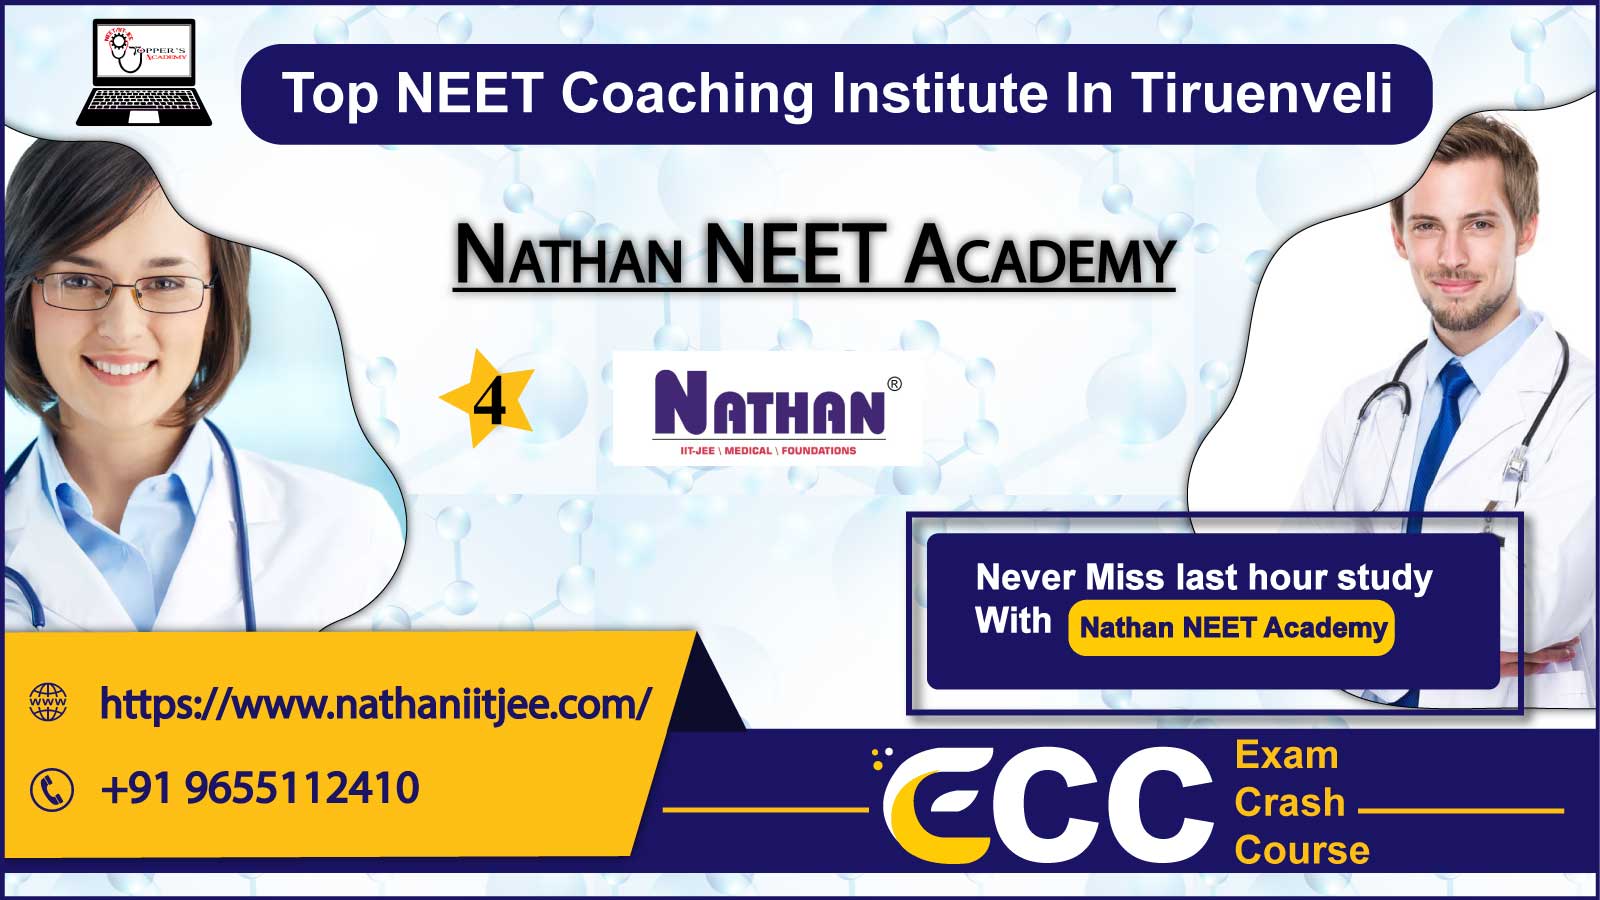 Nathan NEET Academy in Tiruenveli